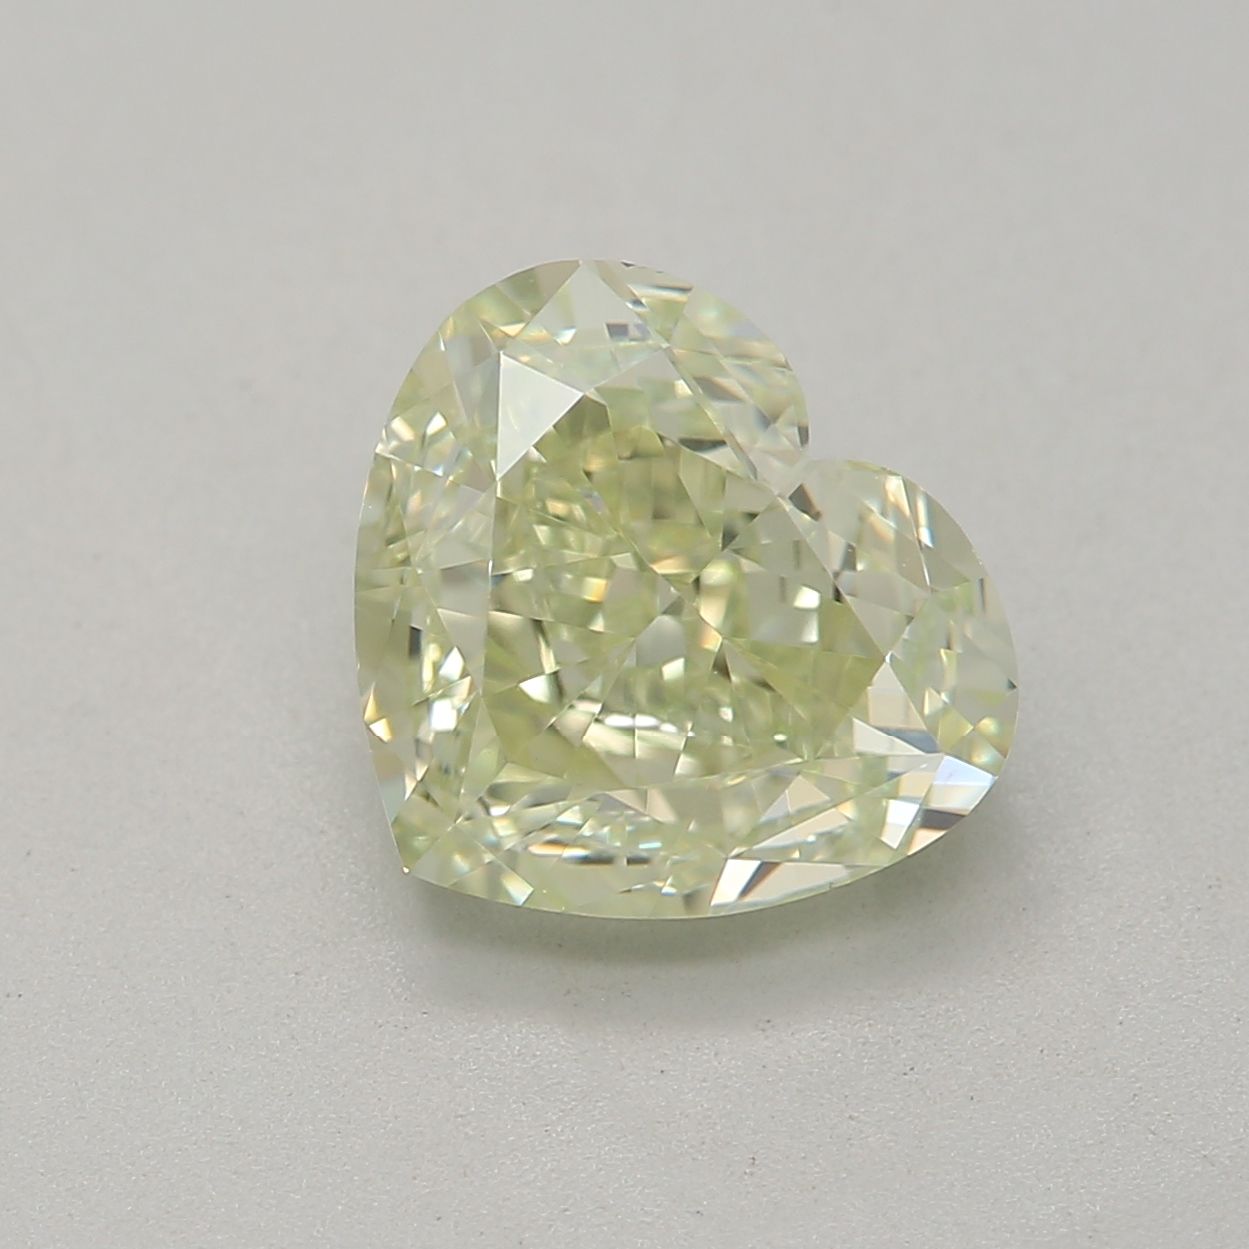 1.51 Carat Heart Loose Diamond, , VS1, Super Ideal, GIA Certified | Thumbnail